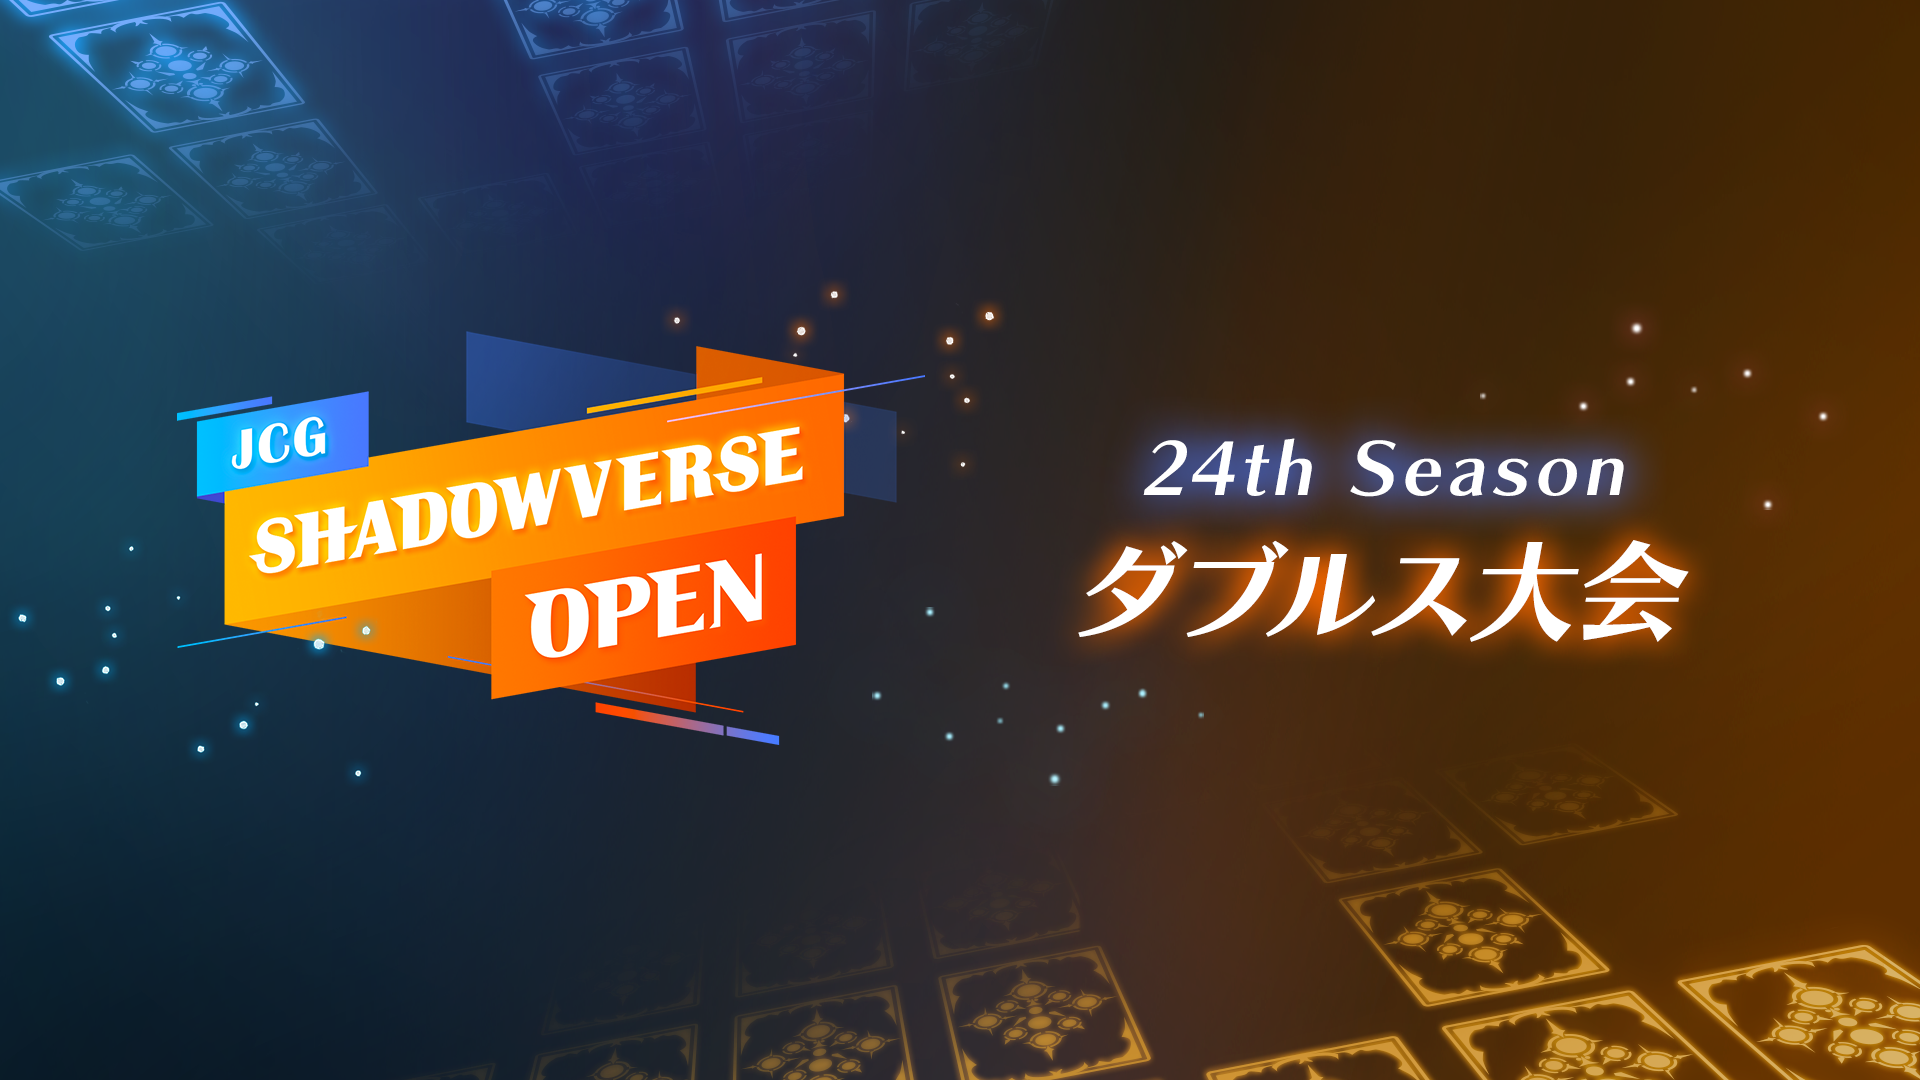 JCG Shadowverse Open 24th Season ダブルス大会開催のお知らせ